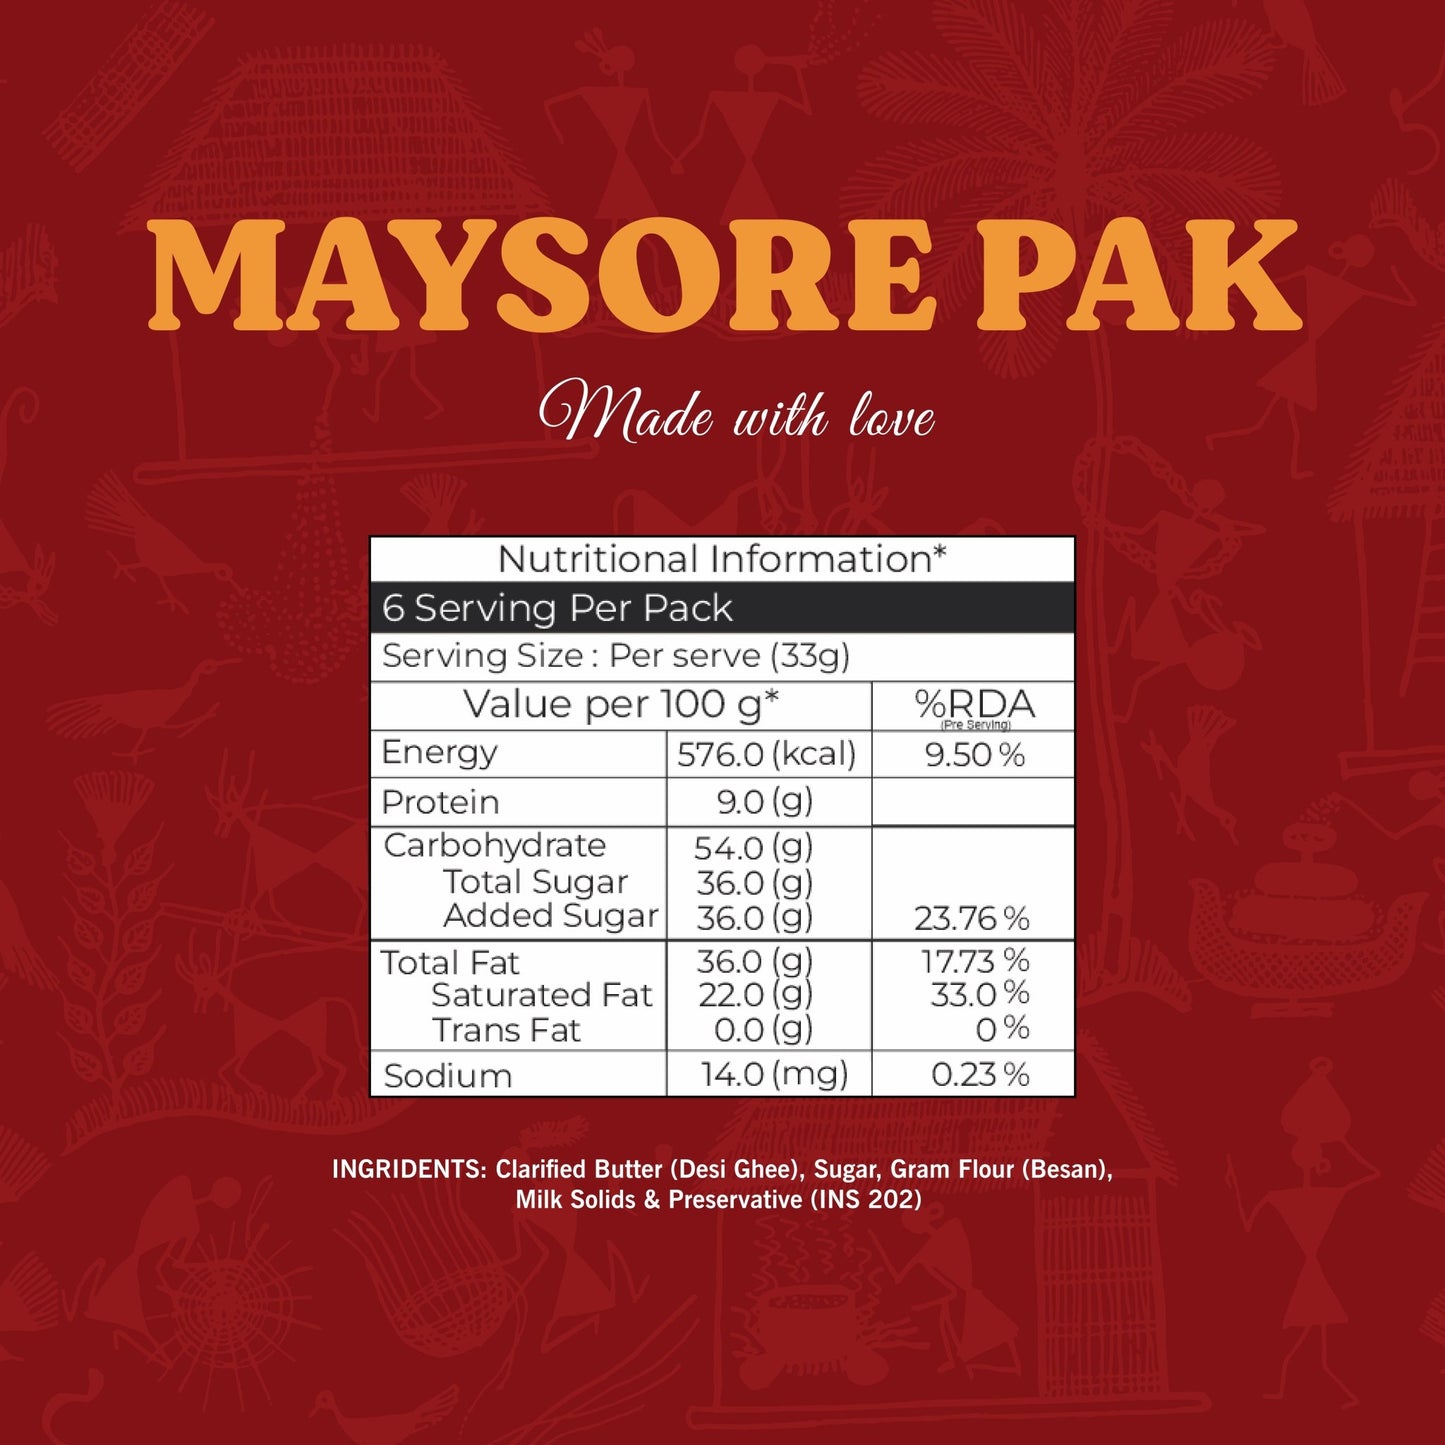 Mysore Pak - Lynk Foods